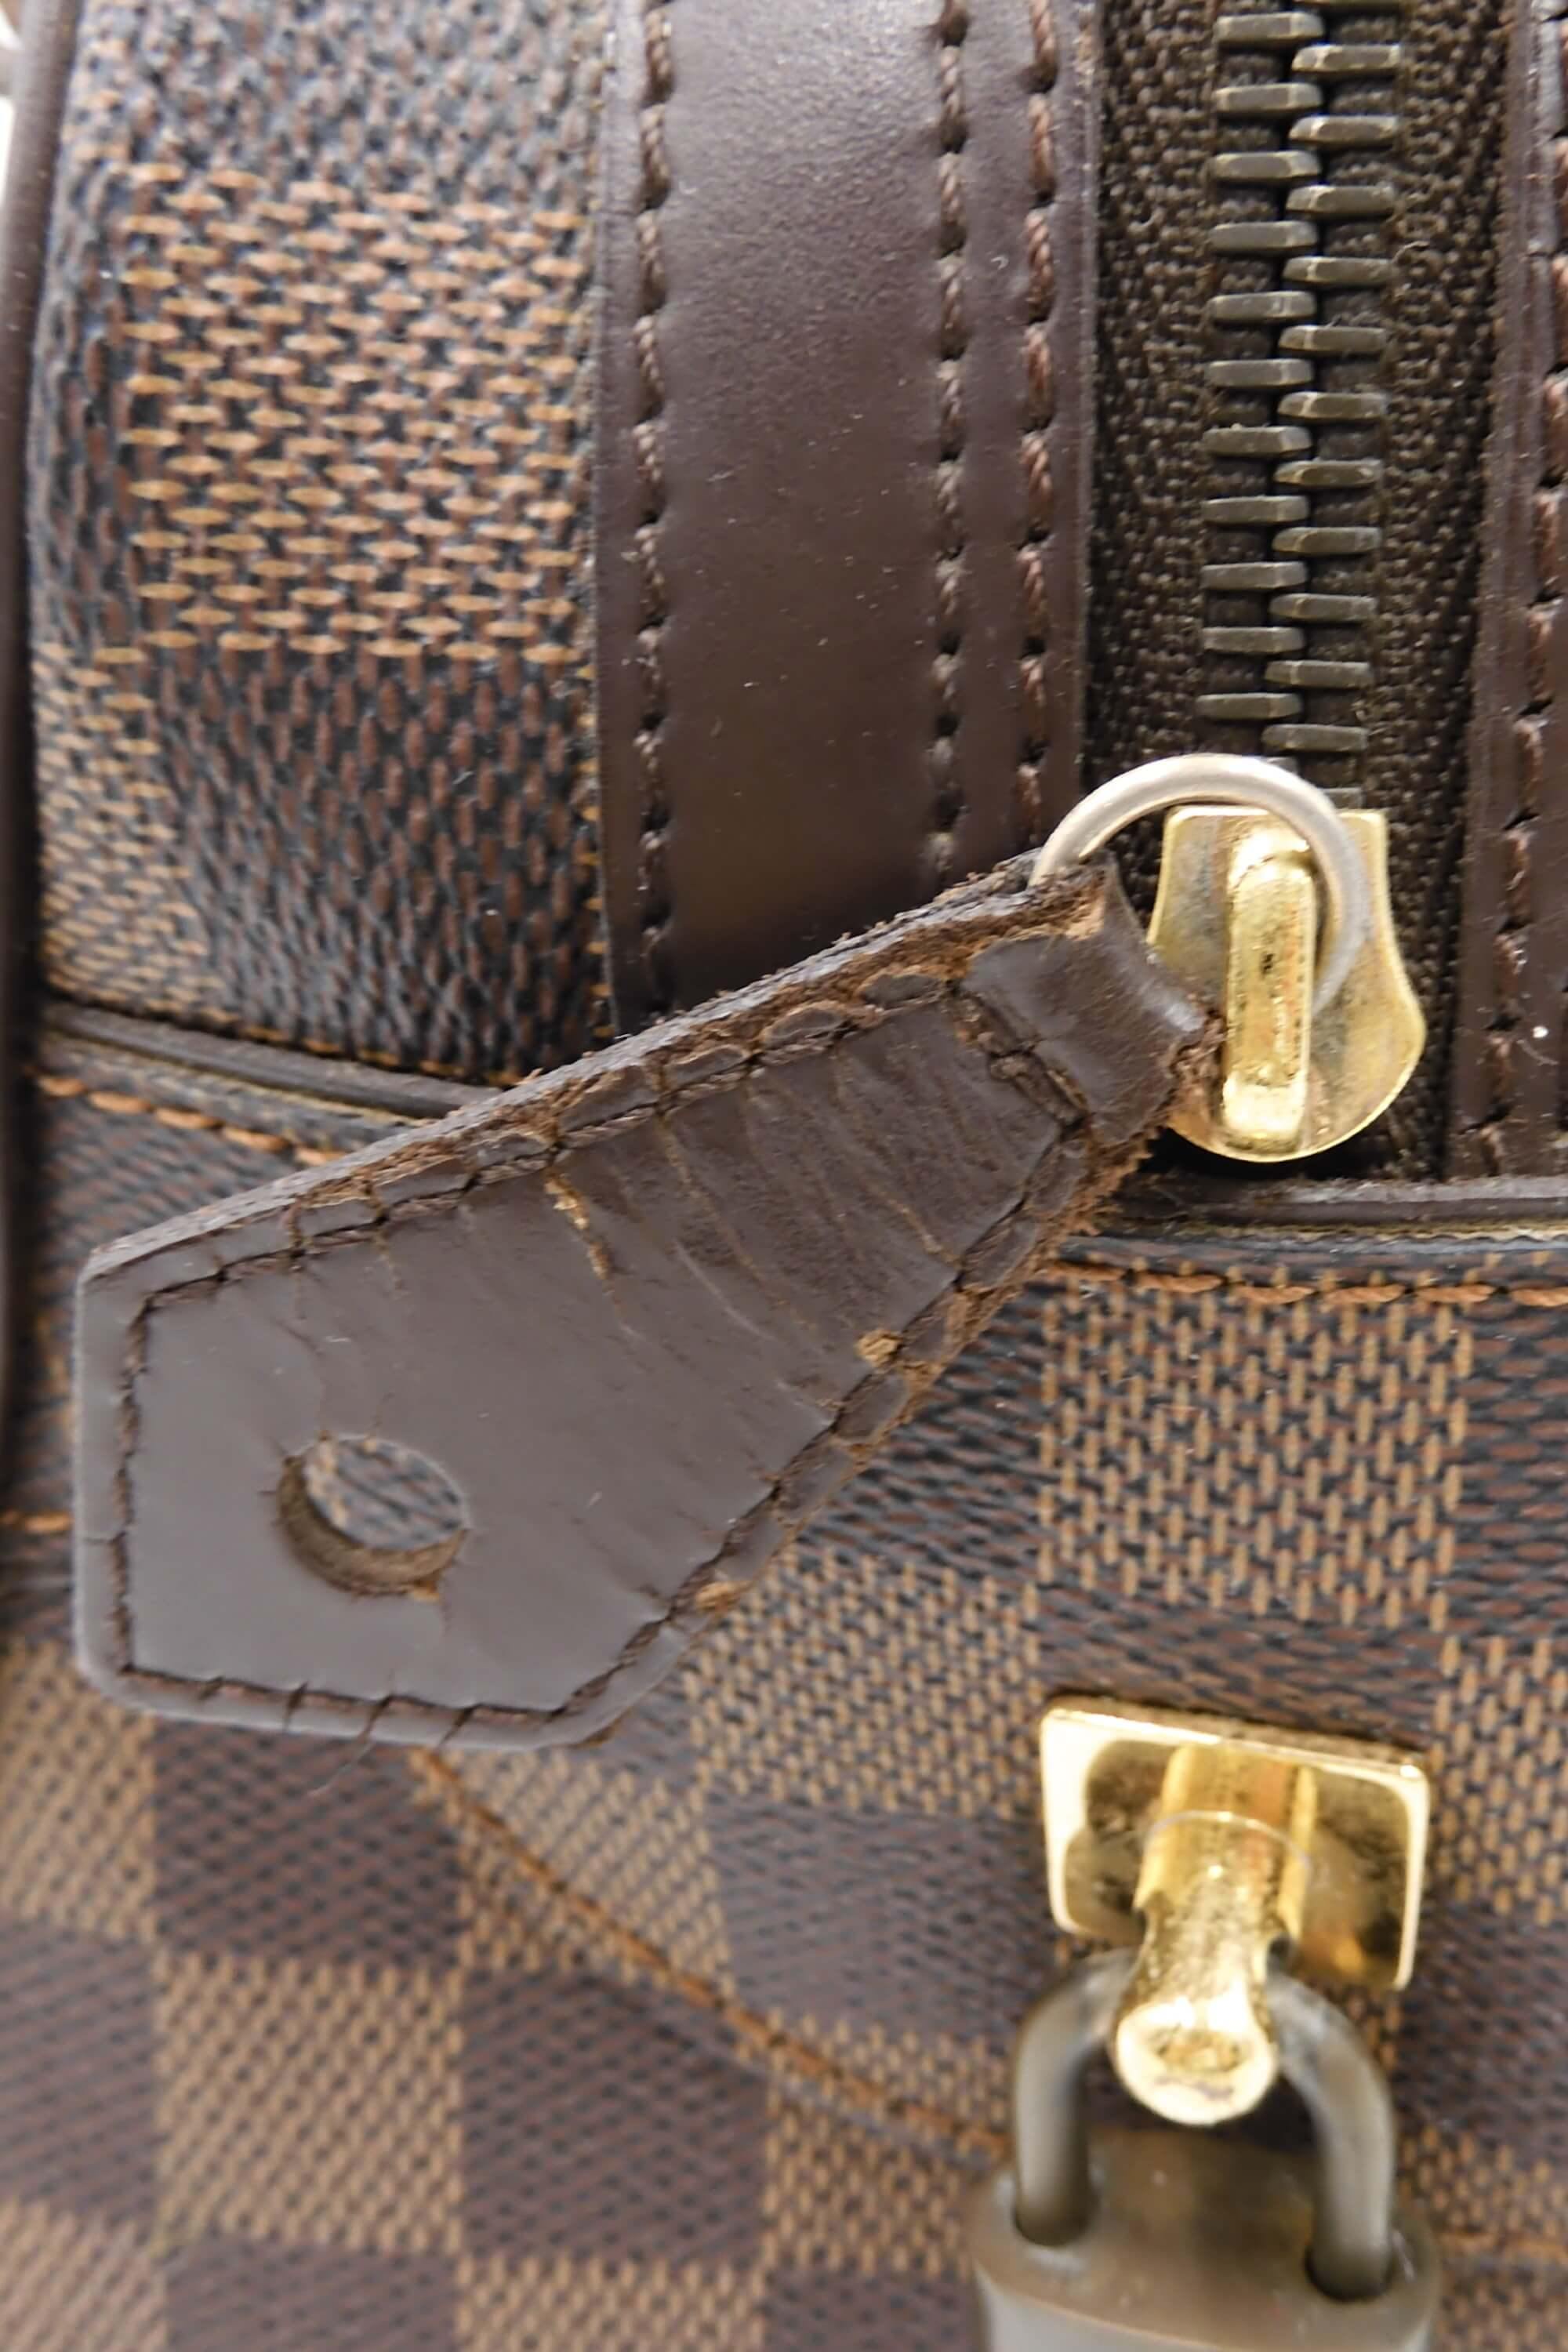 Duomo cloth handbag Louis Vuitton Brown in Cloth - 30511925